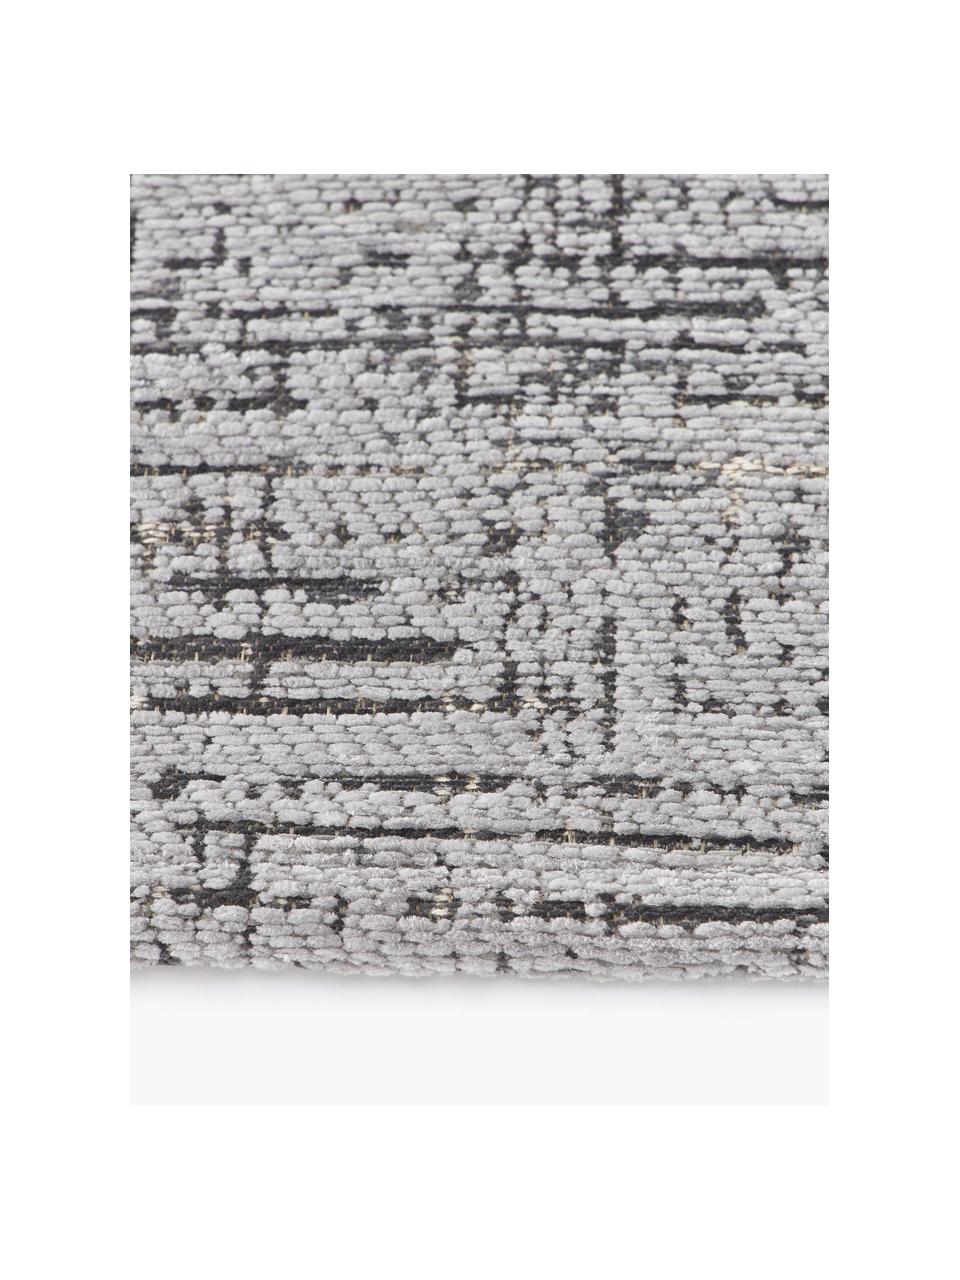 Teppich Yava, 70% Polyester, 30% Baumwolle (GRS-zertifiziert), Grau, Schwarz, B 120 x L 180 cm (Grösse S)